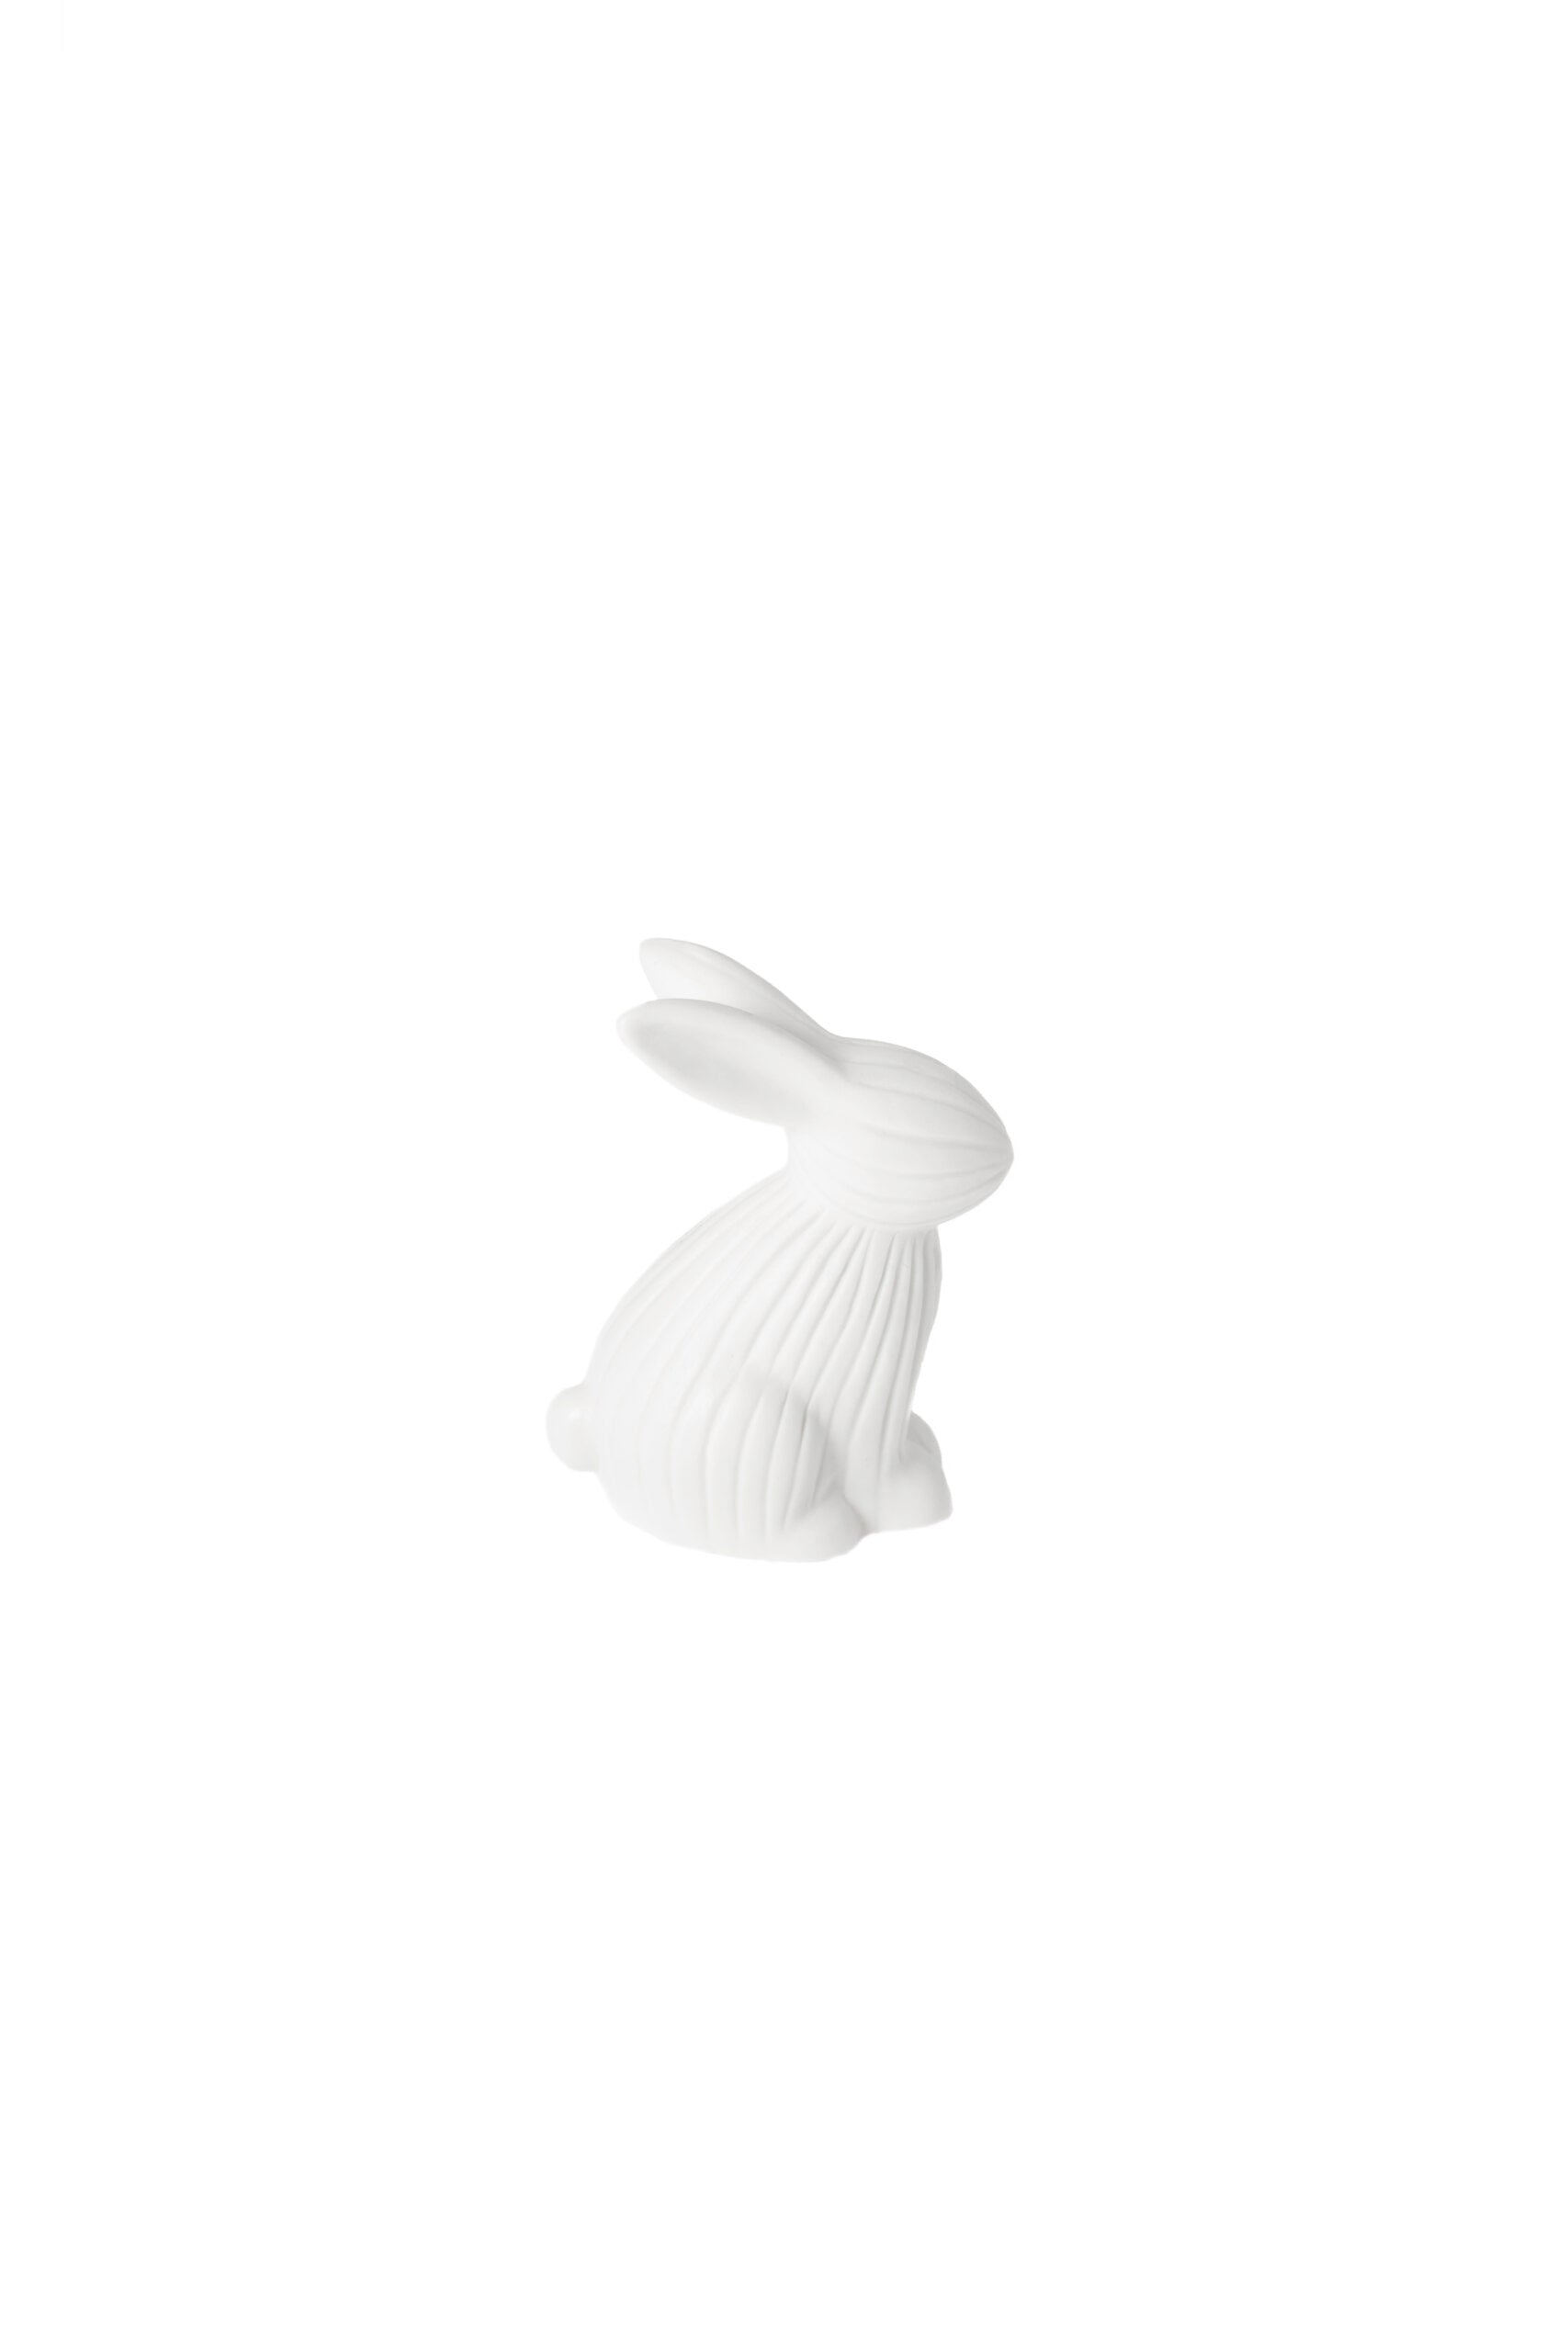 Rabbit - Arthur | White | Ceramic | by Storefactory - Lifestory